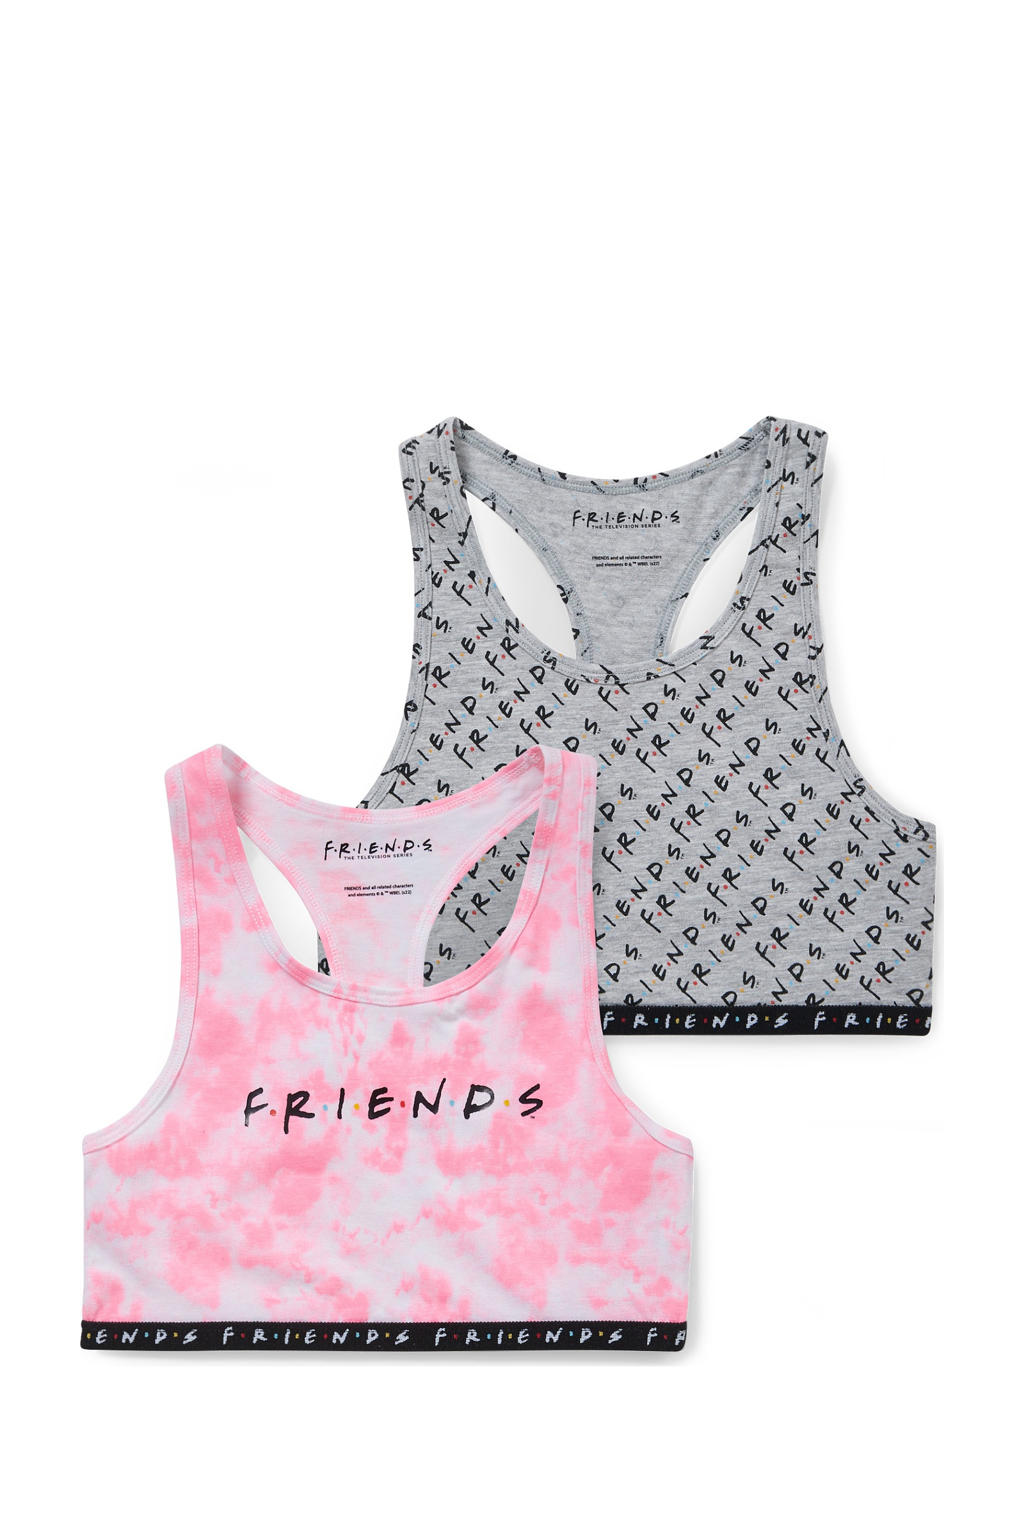 C&A Friends bh top - set van 2 roze/grijs